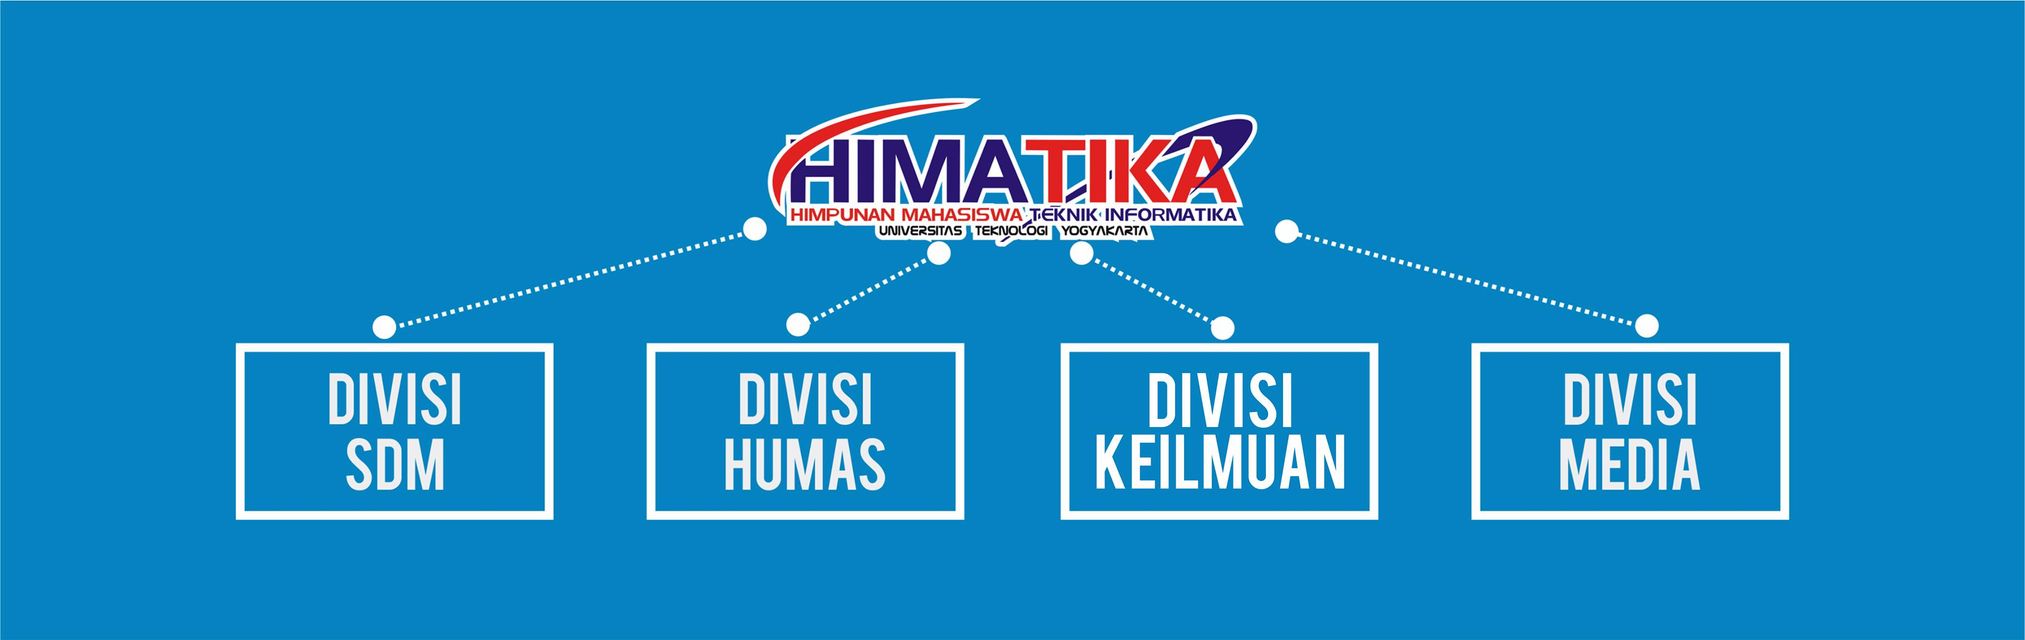 Himatika Logo